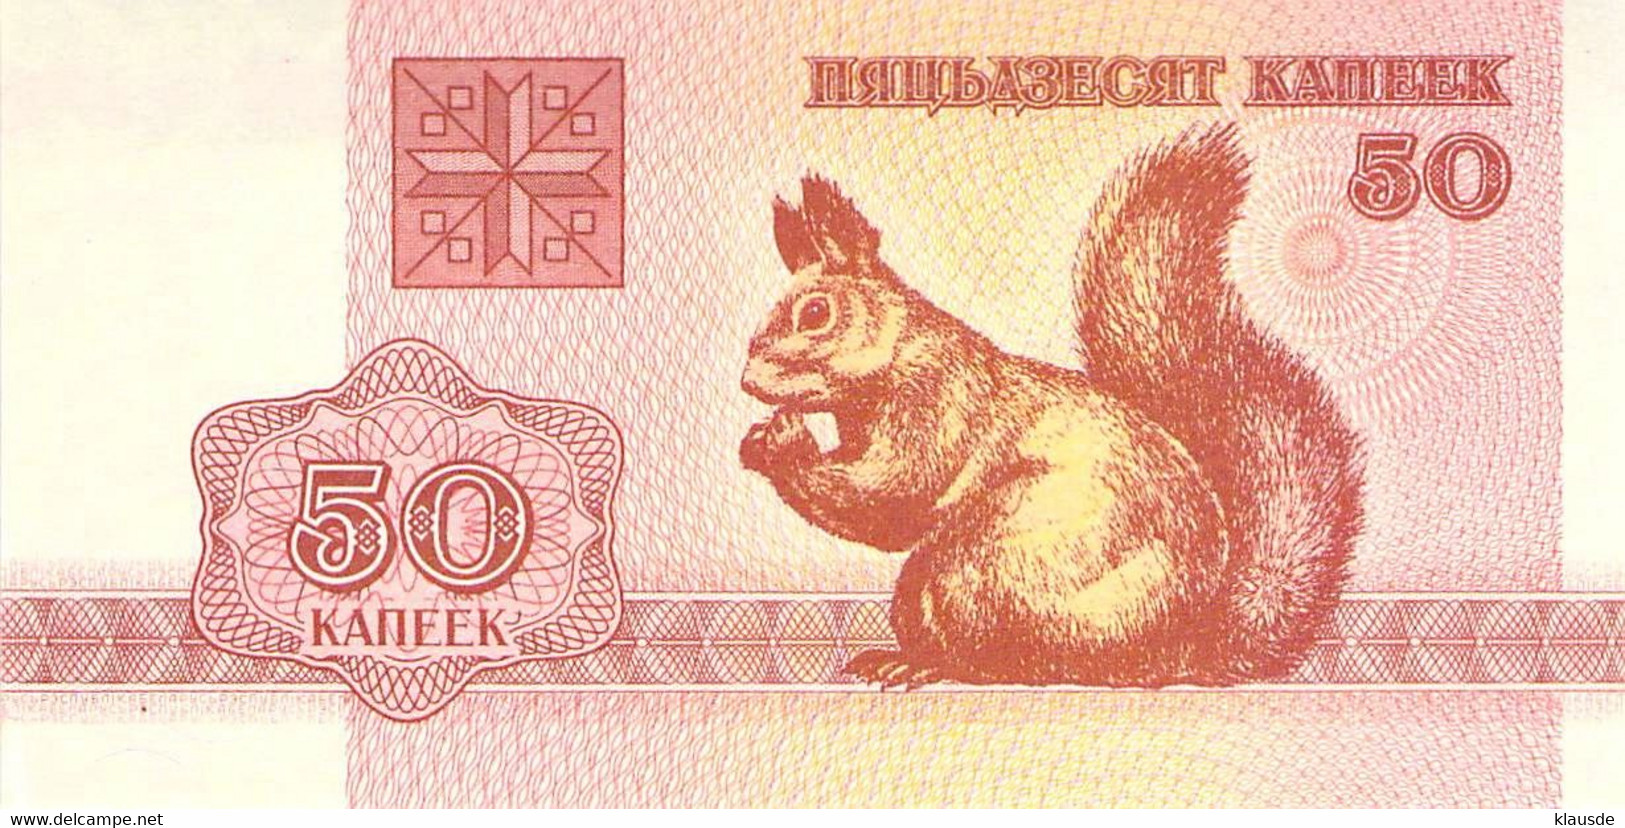 1 Banknoten 50 Rubel 2002 UNC Belarus Weissrussland - Autres - Europe